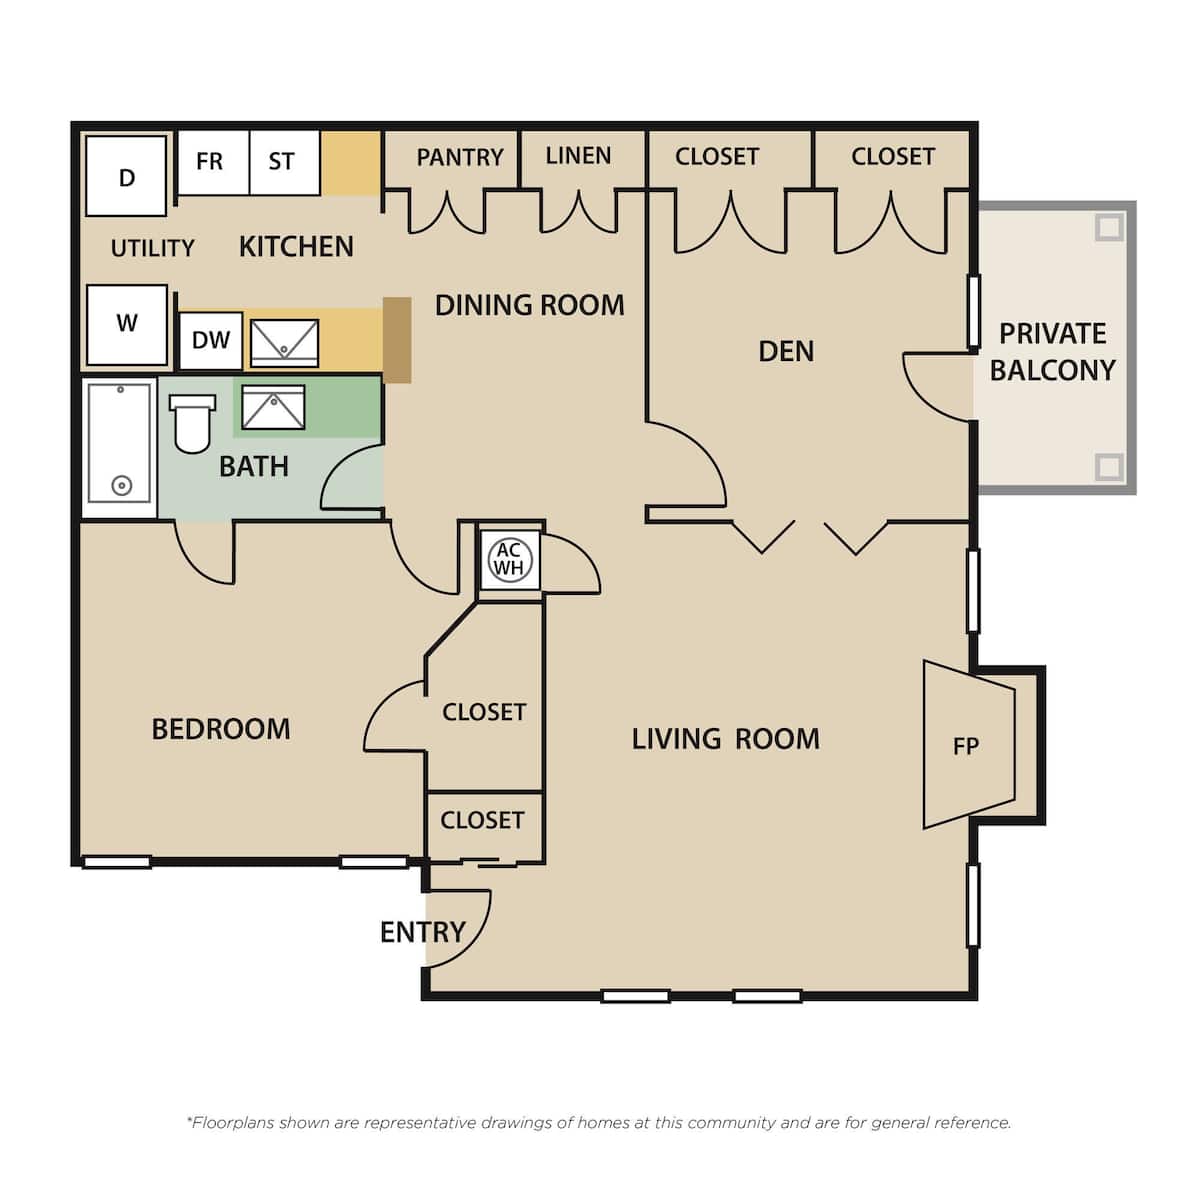 Floorplan diagram for PARK A8, showing 1 bedroom